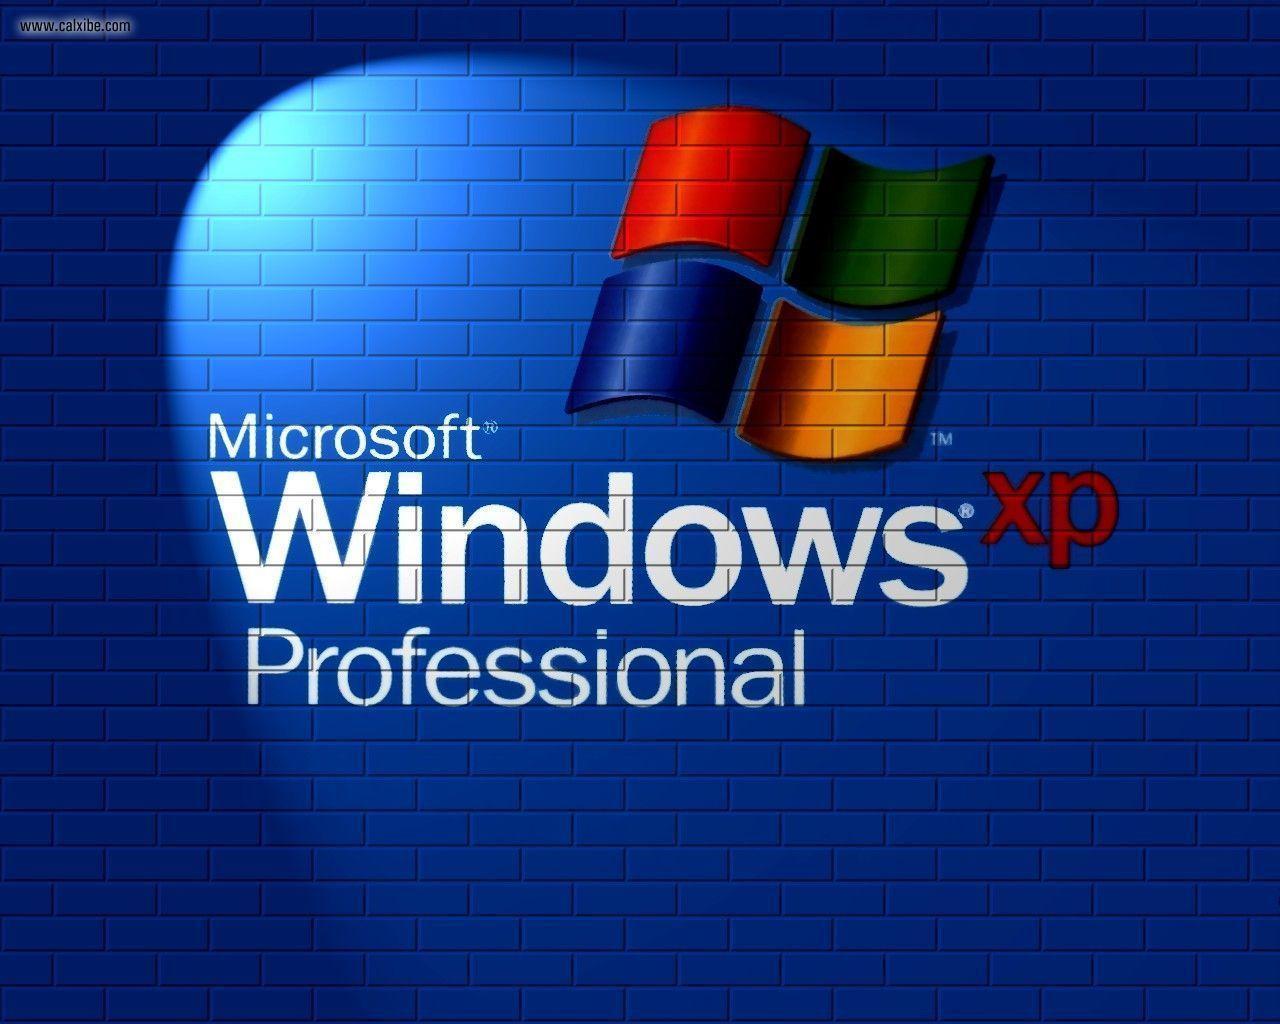 Wallpaper For > Windows Xp Professional Wallpaper Blue